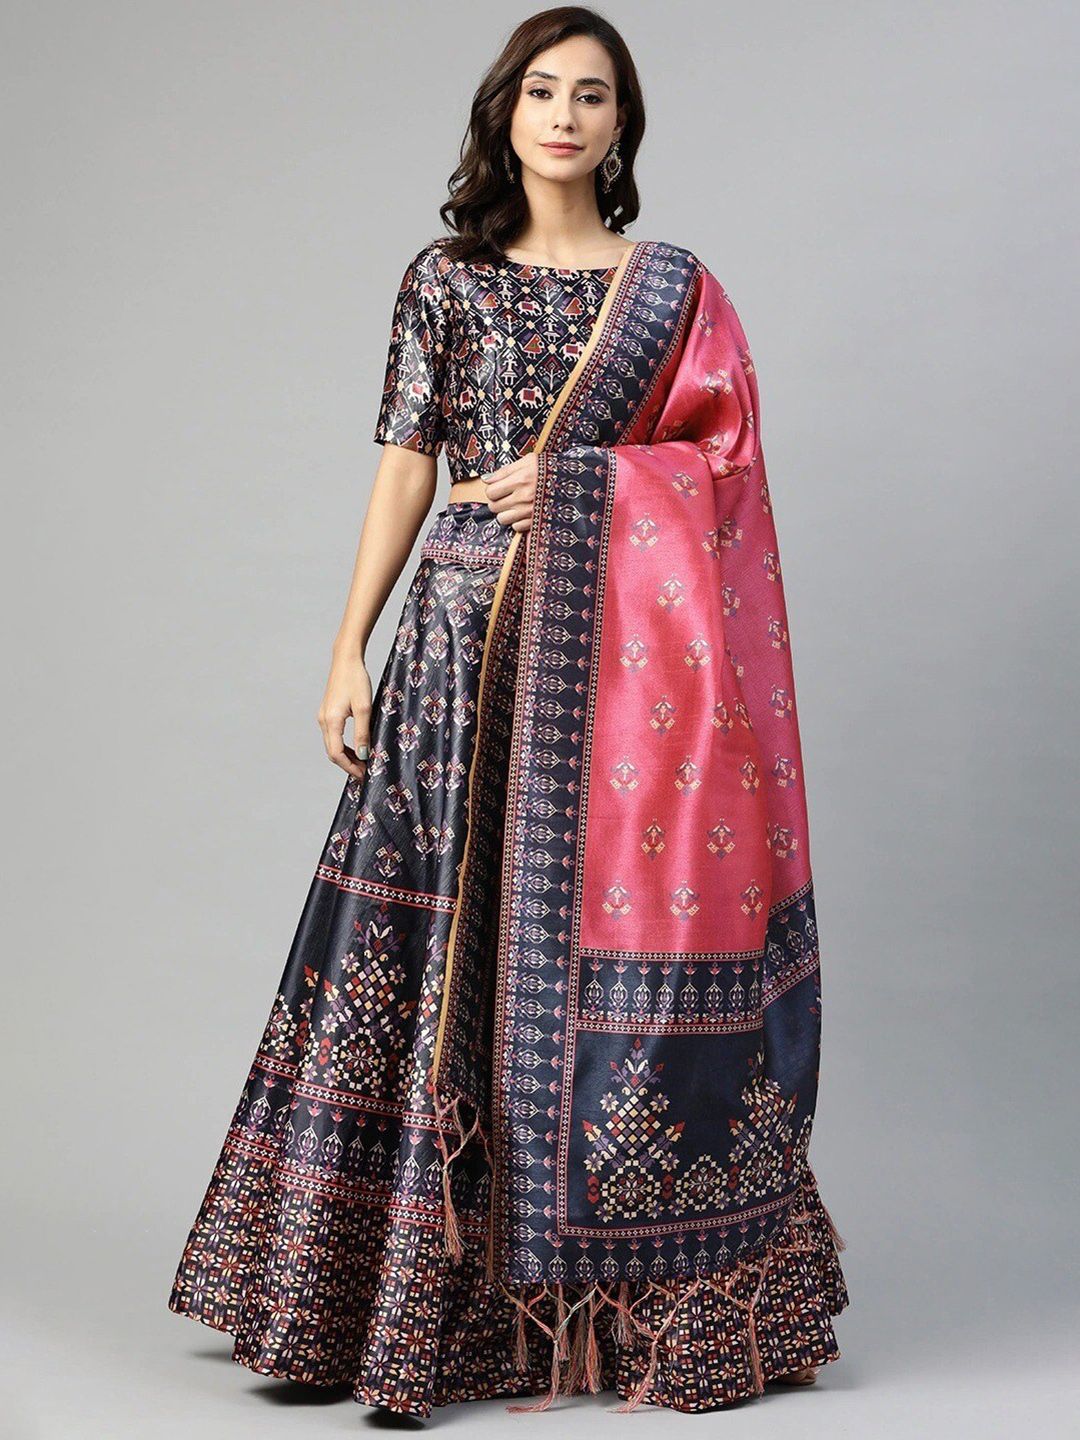 YOYO Fashion Printed Semi-Stitched Lehenga & Unstitched Blouse With Dupatta Price in India